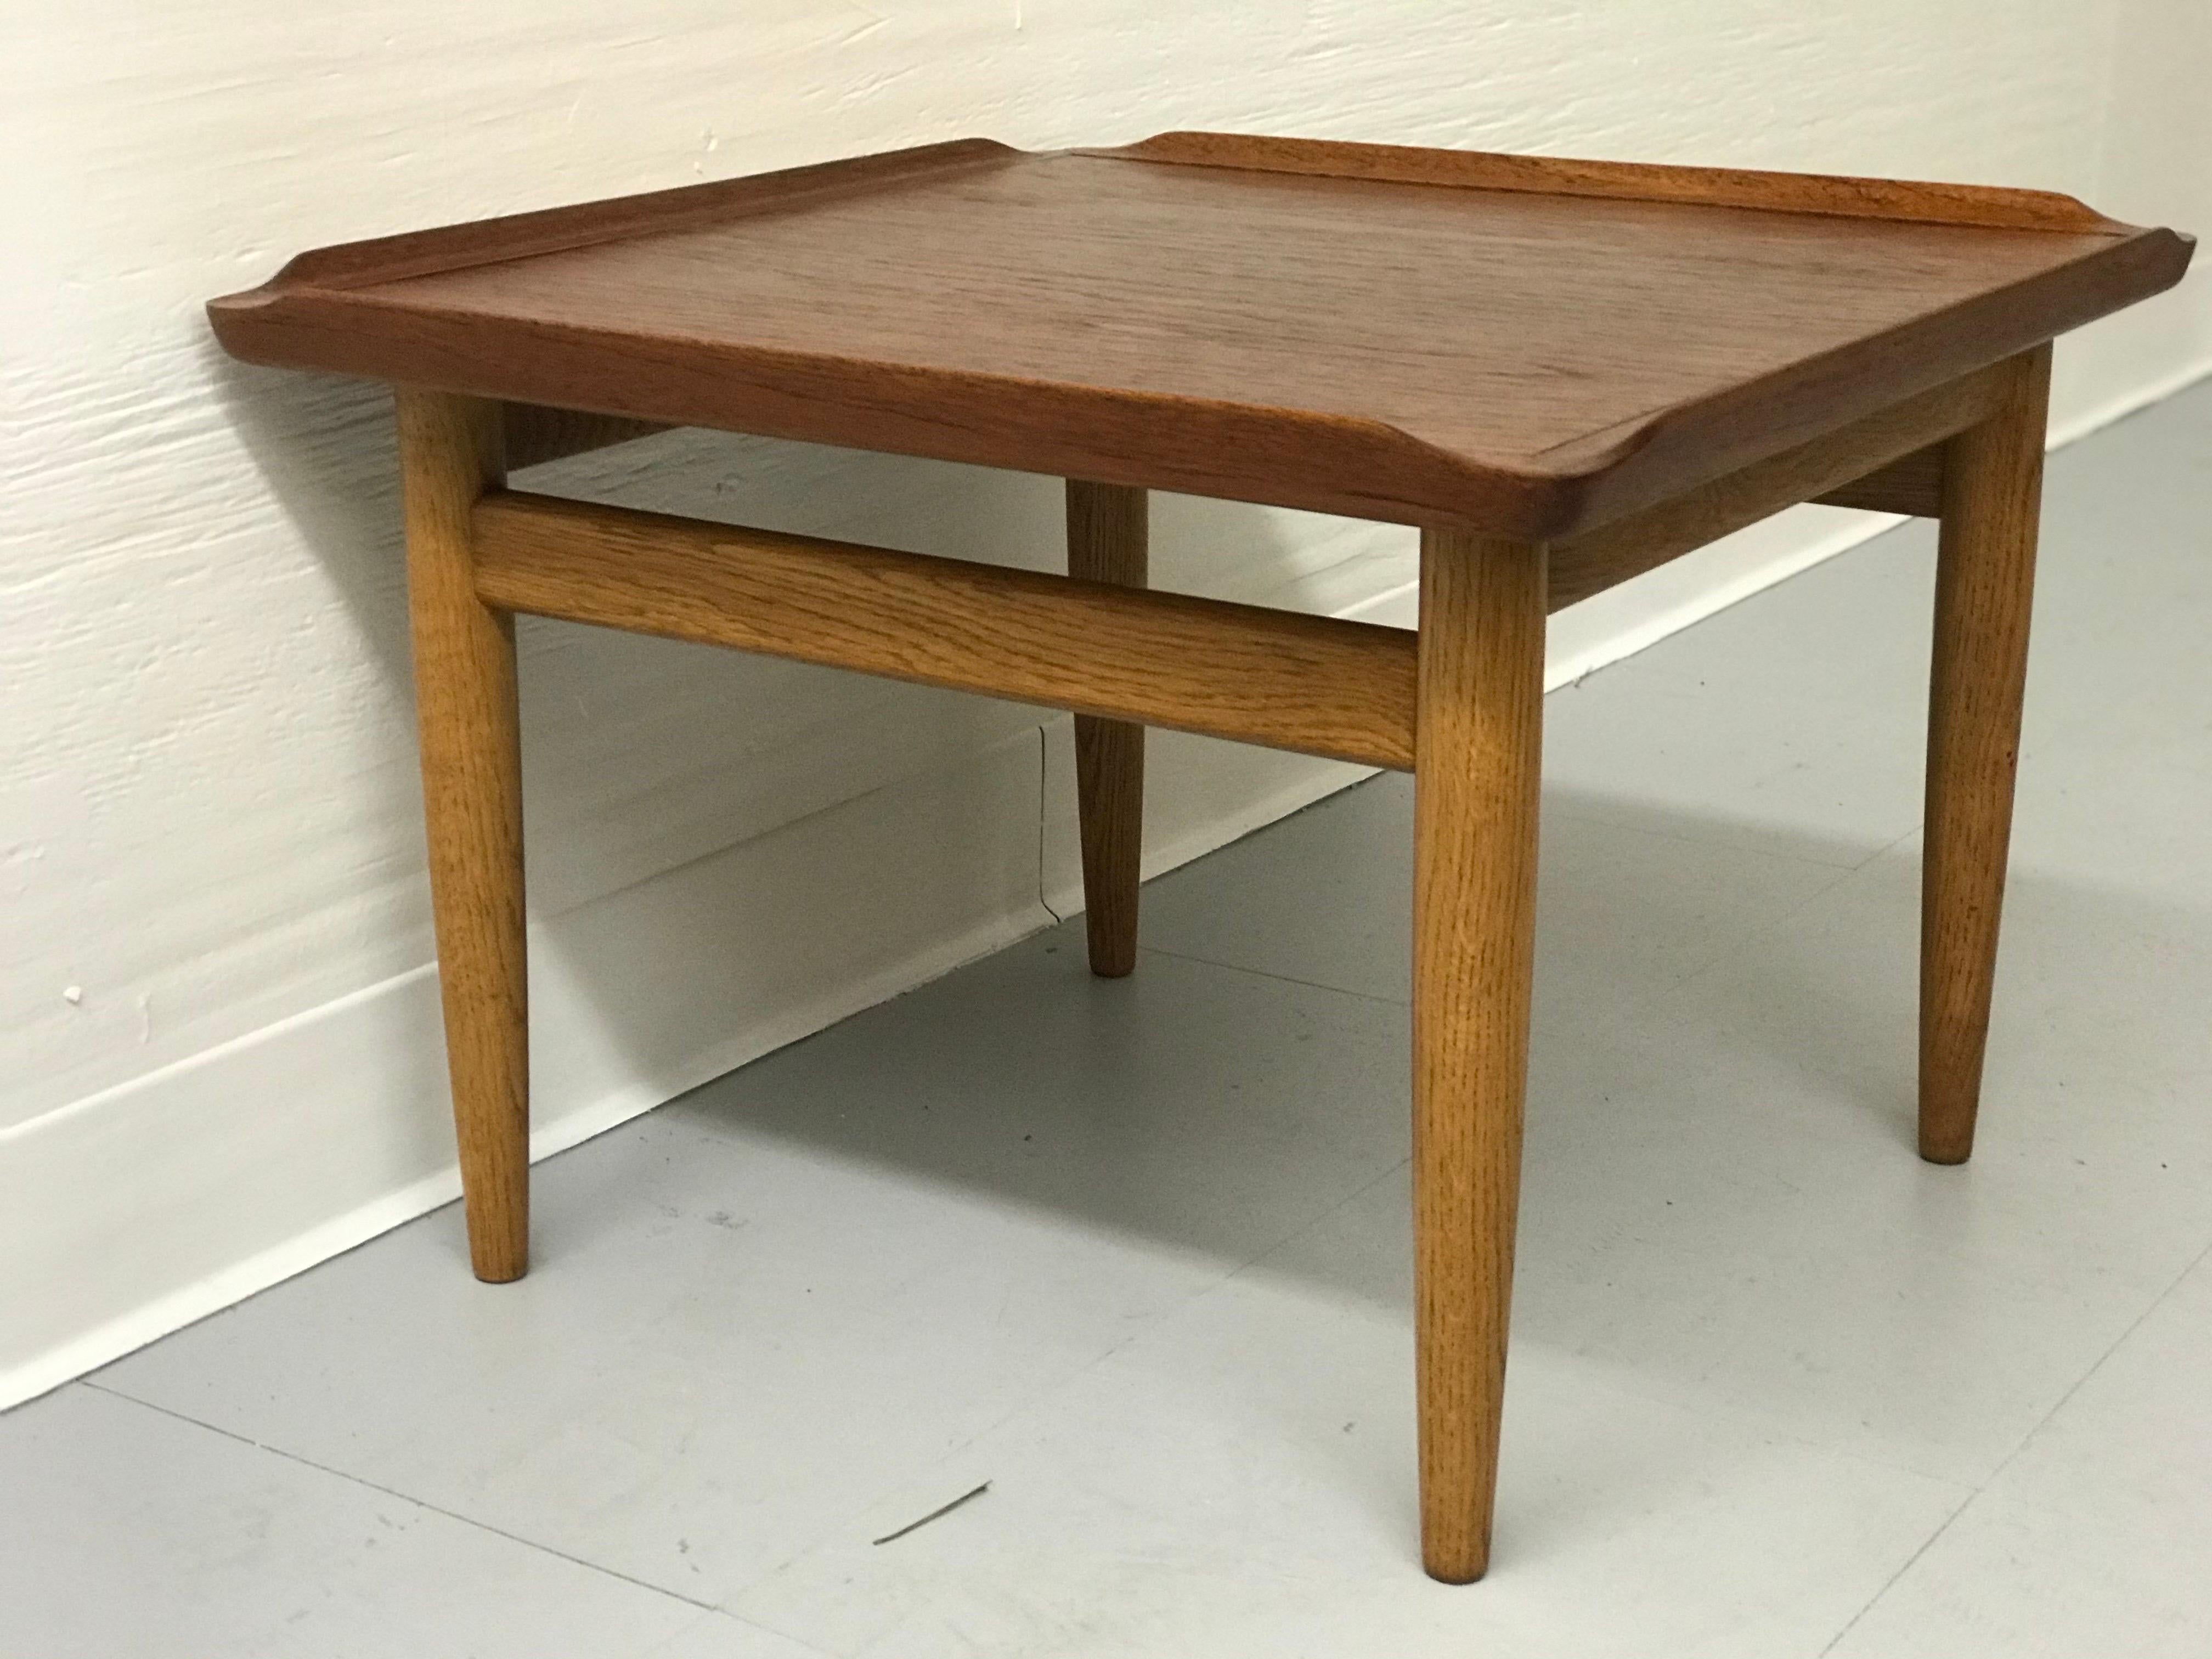 Vintage Danish modern table.

Dimensions: 22 W ; 15 1/2 H ; 22 D.